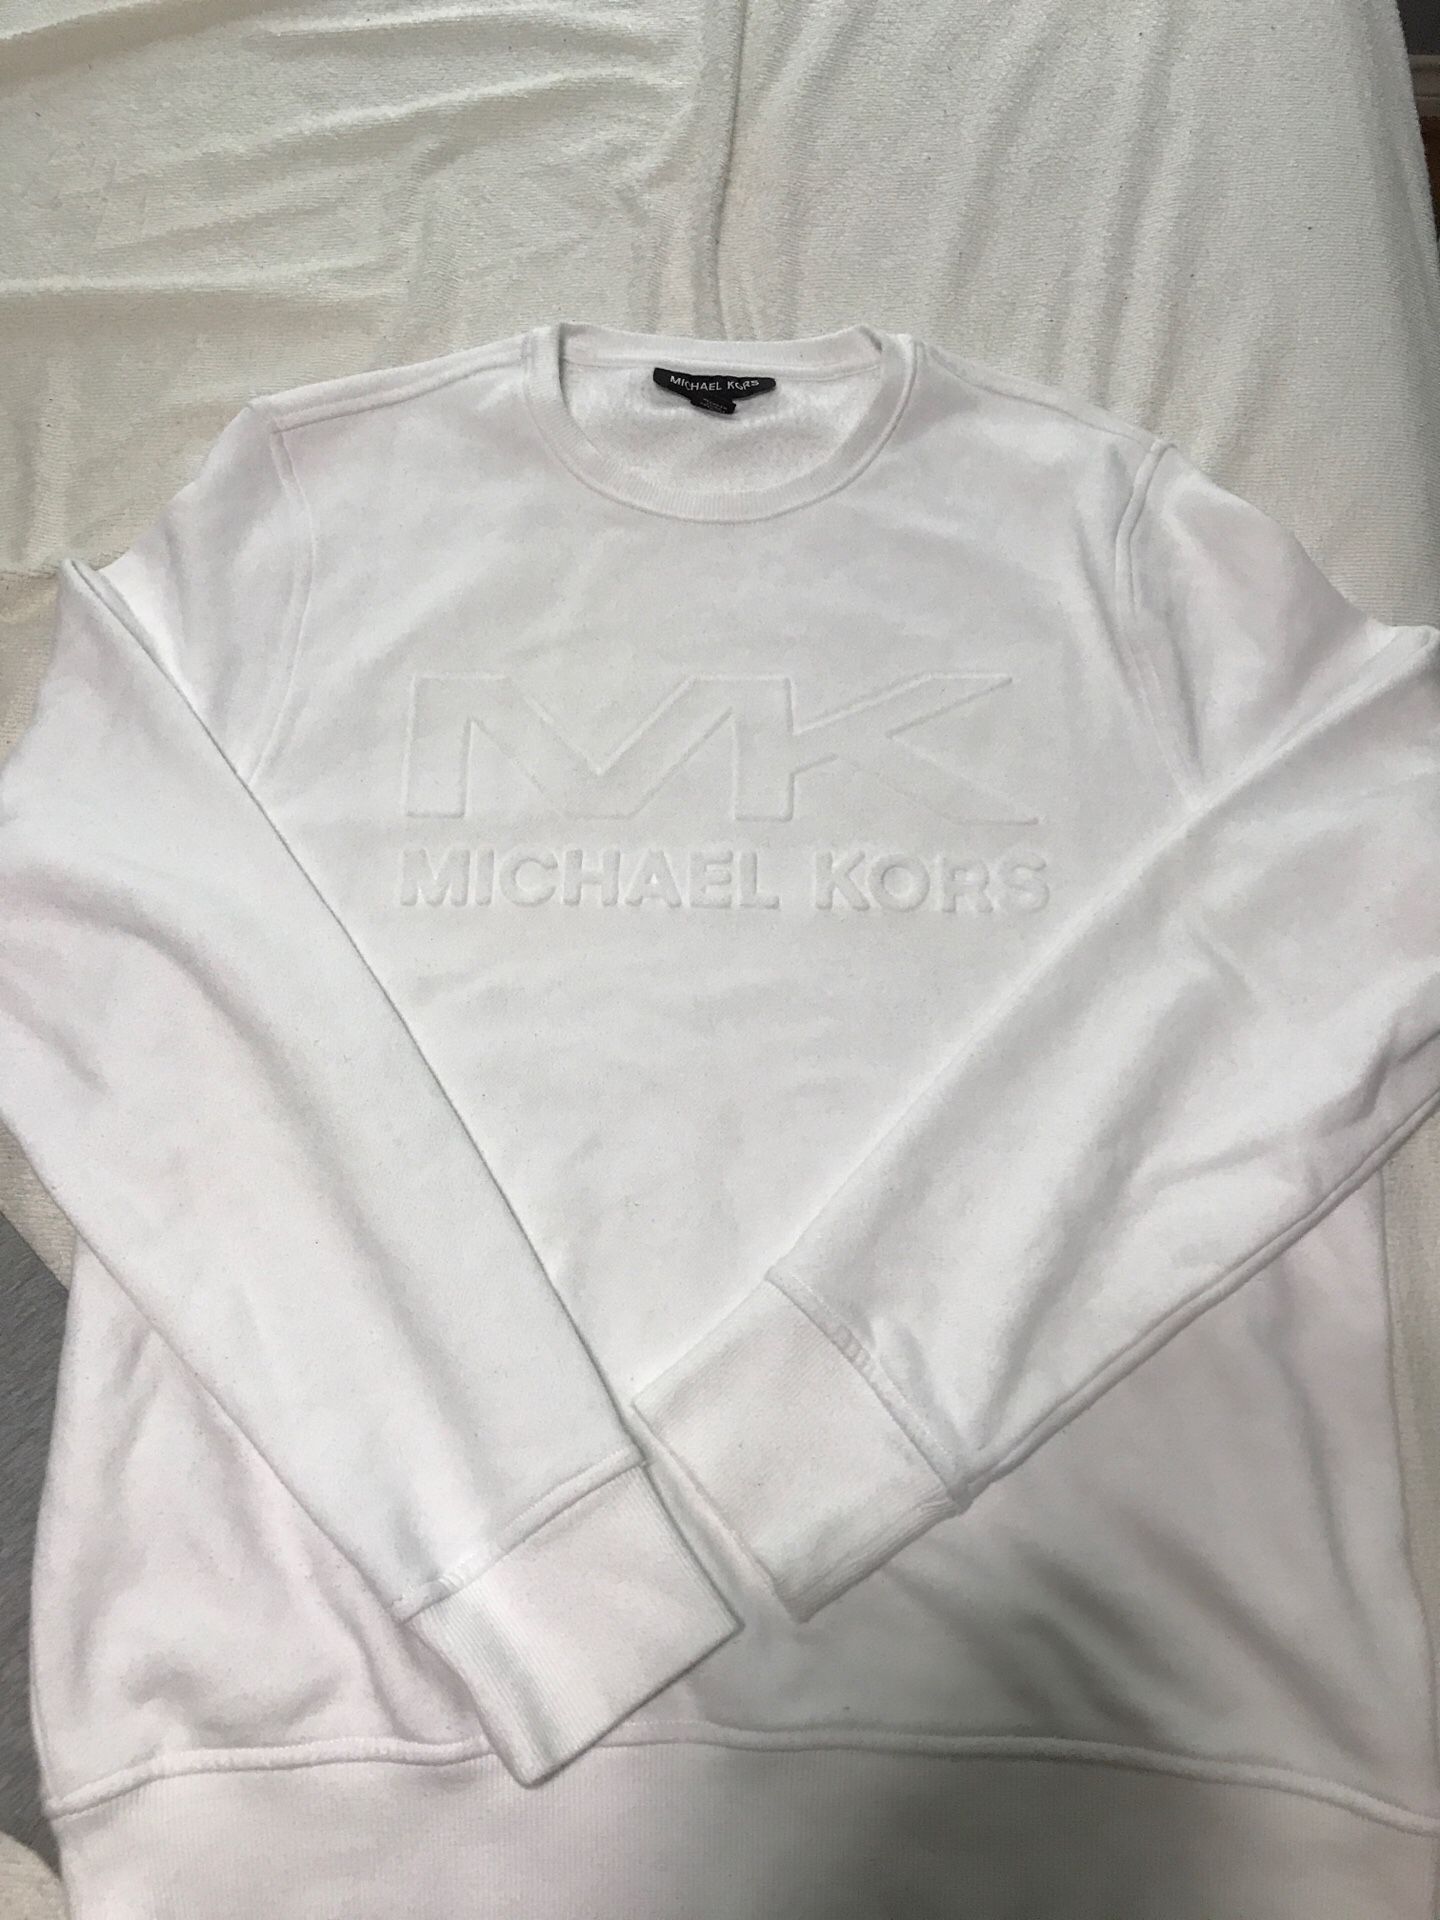 Michael kors sweater